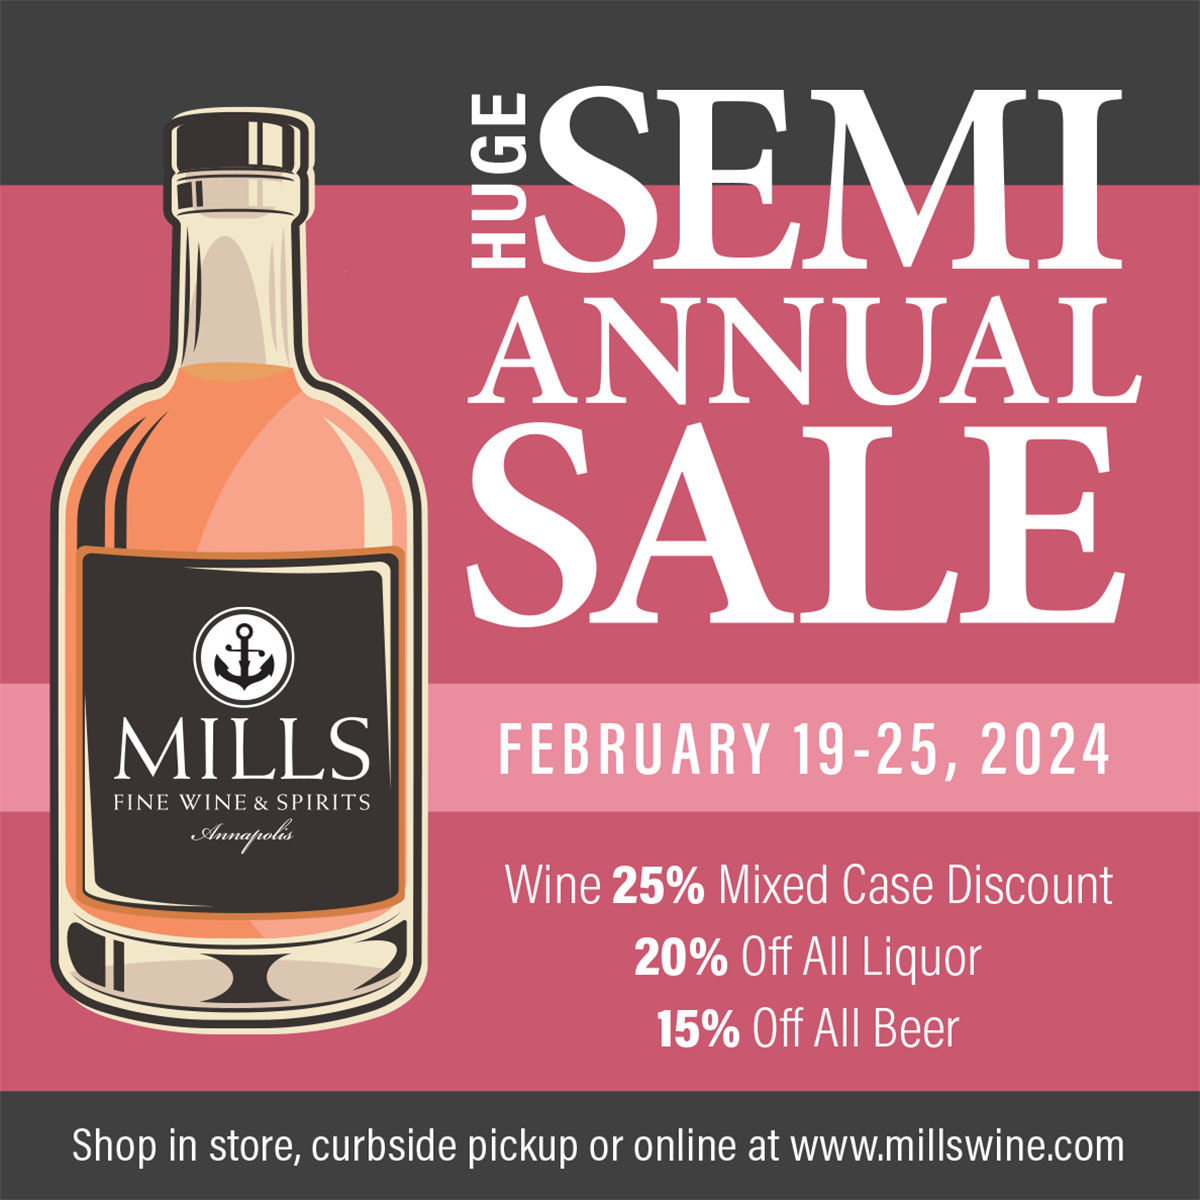 Mills' Huge SemiAnnual Sale @ Mills Fine Wine & Spirits